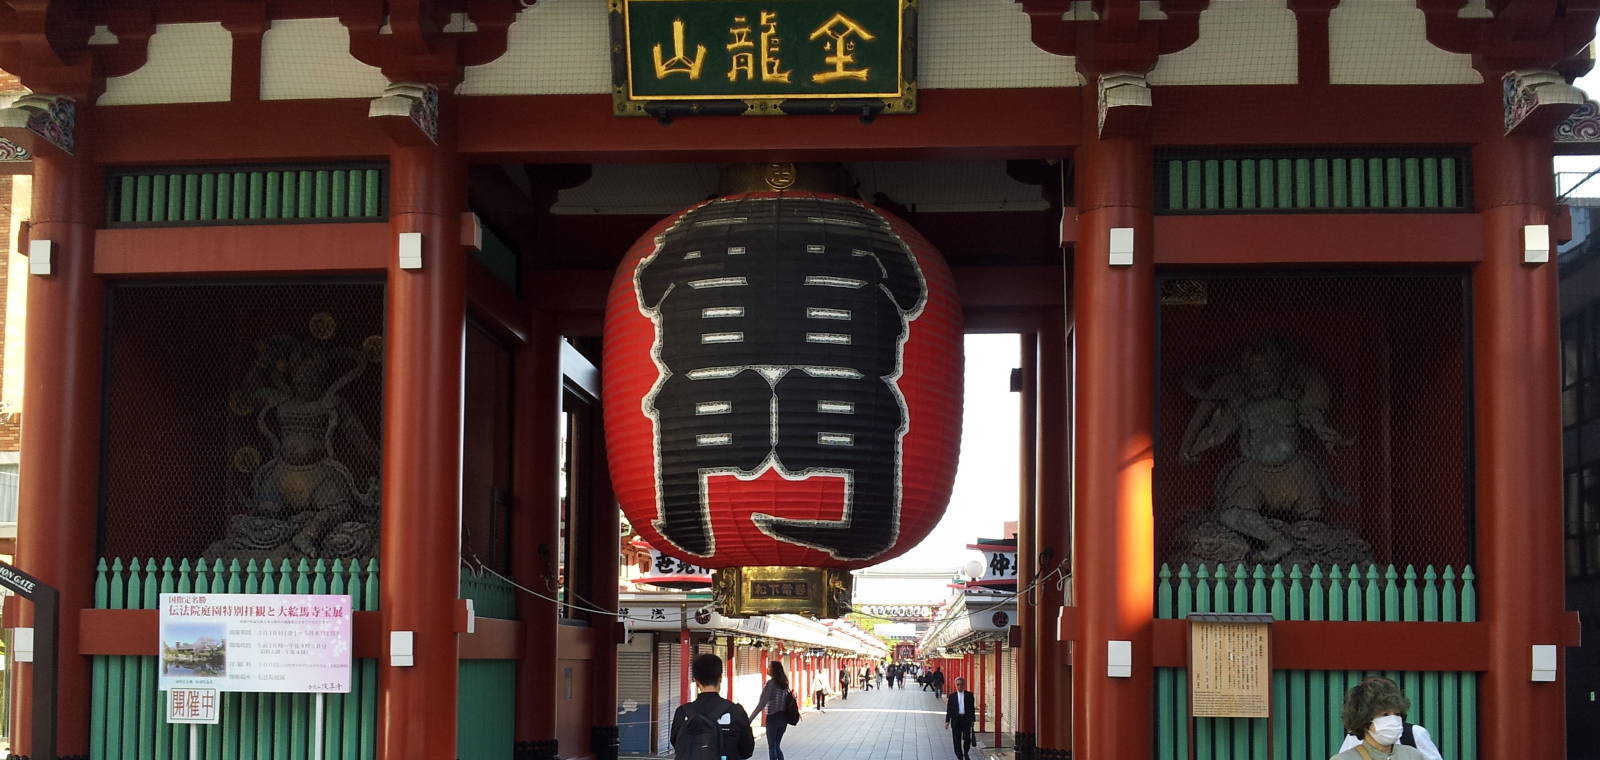 Kaminarimon, the outer gate of the Sensō-ji Buddhist temple at Asakusa, Tōkyō